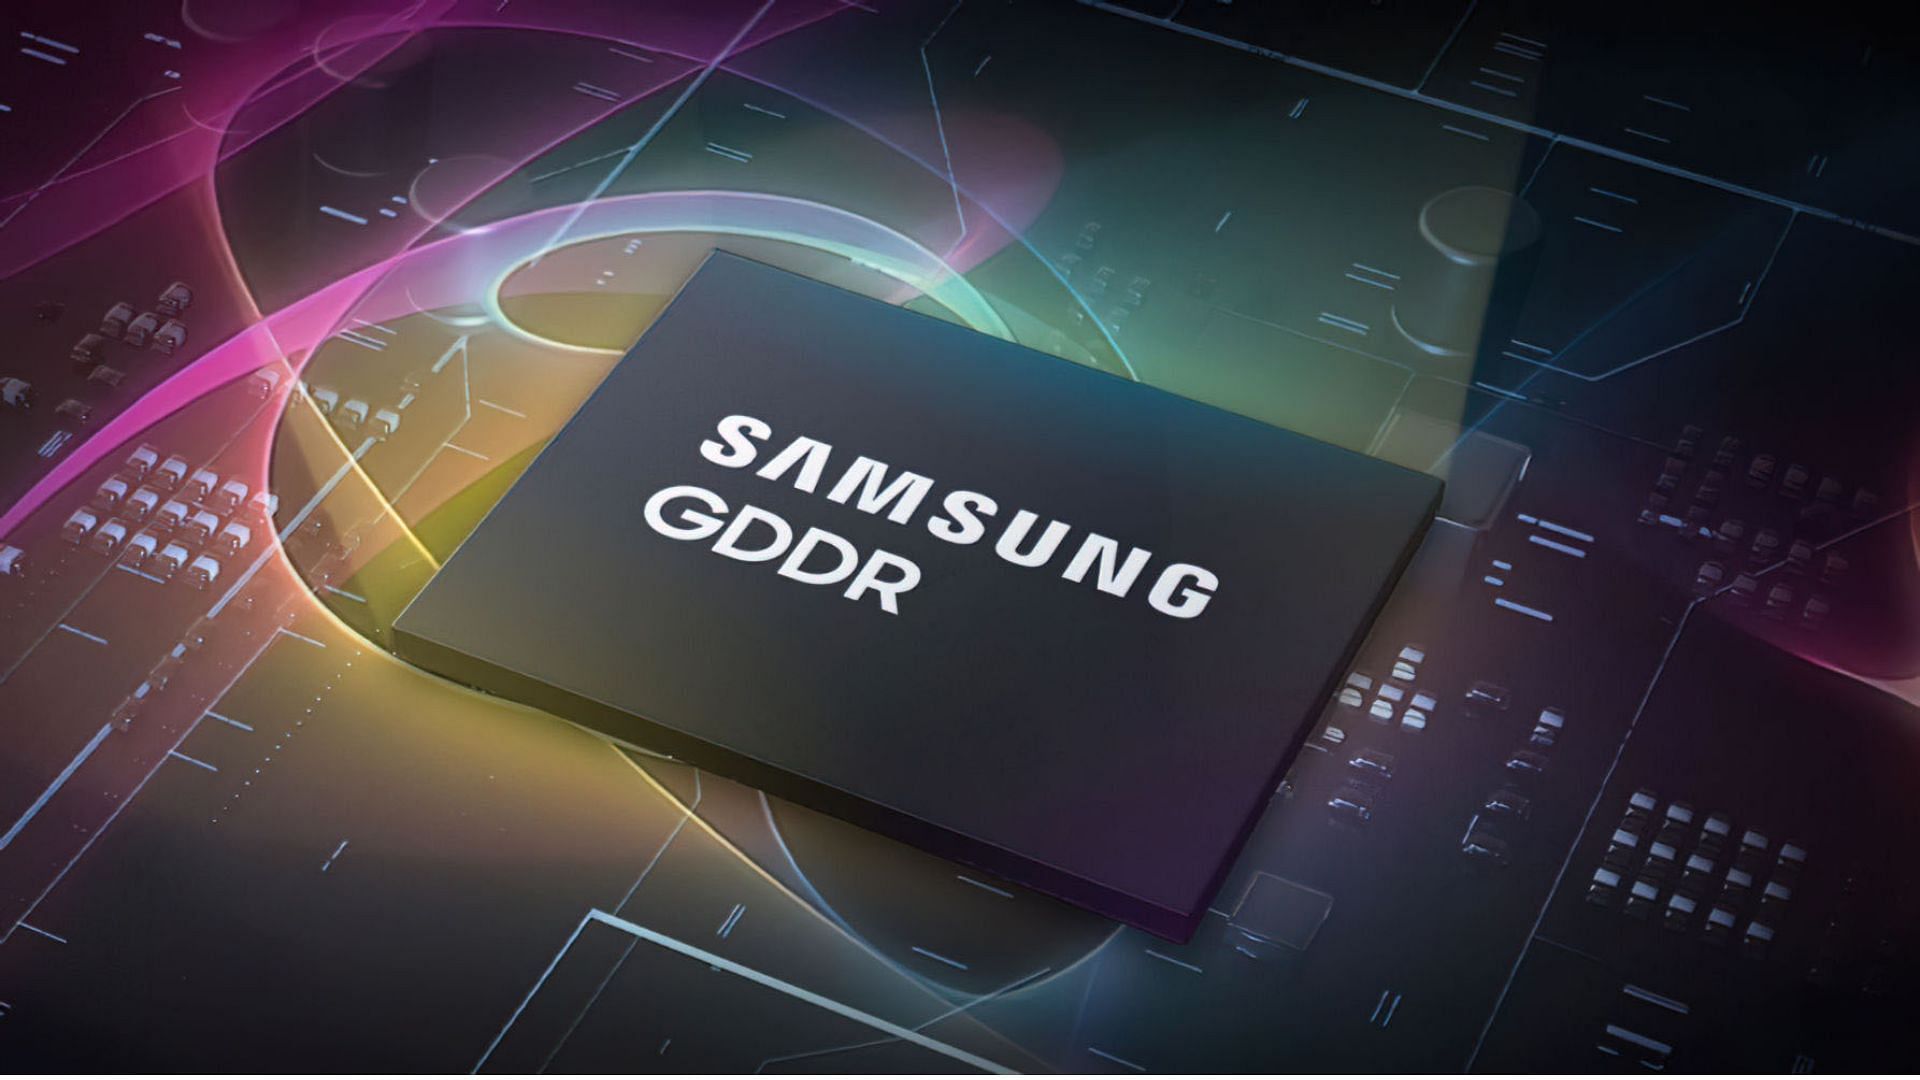 A Samsung GDDR chip (Image via Samsung)